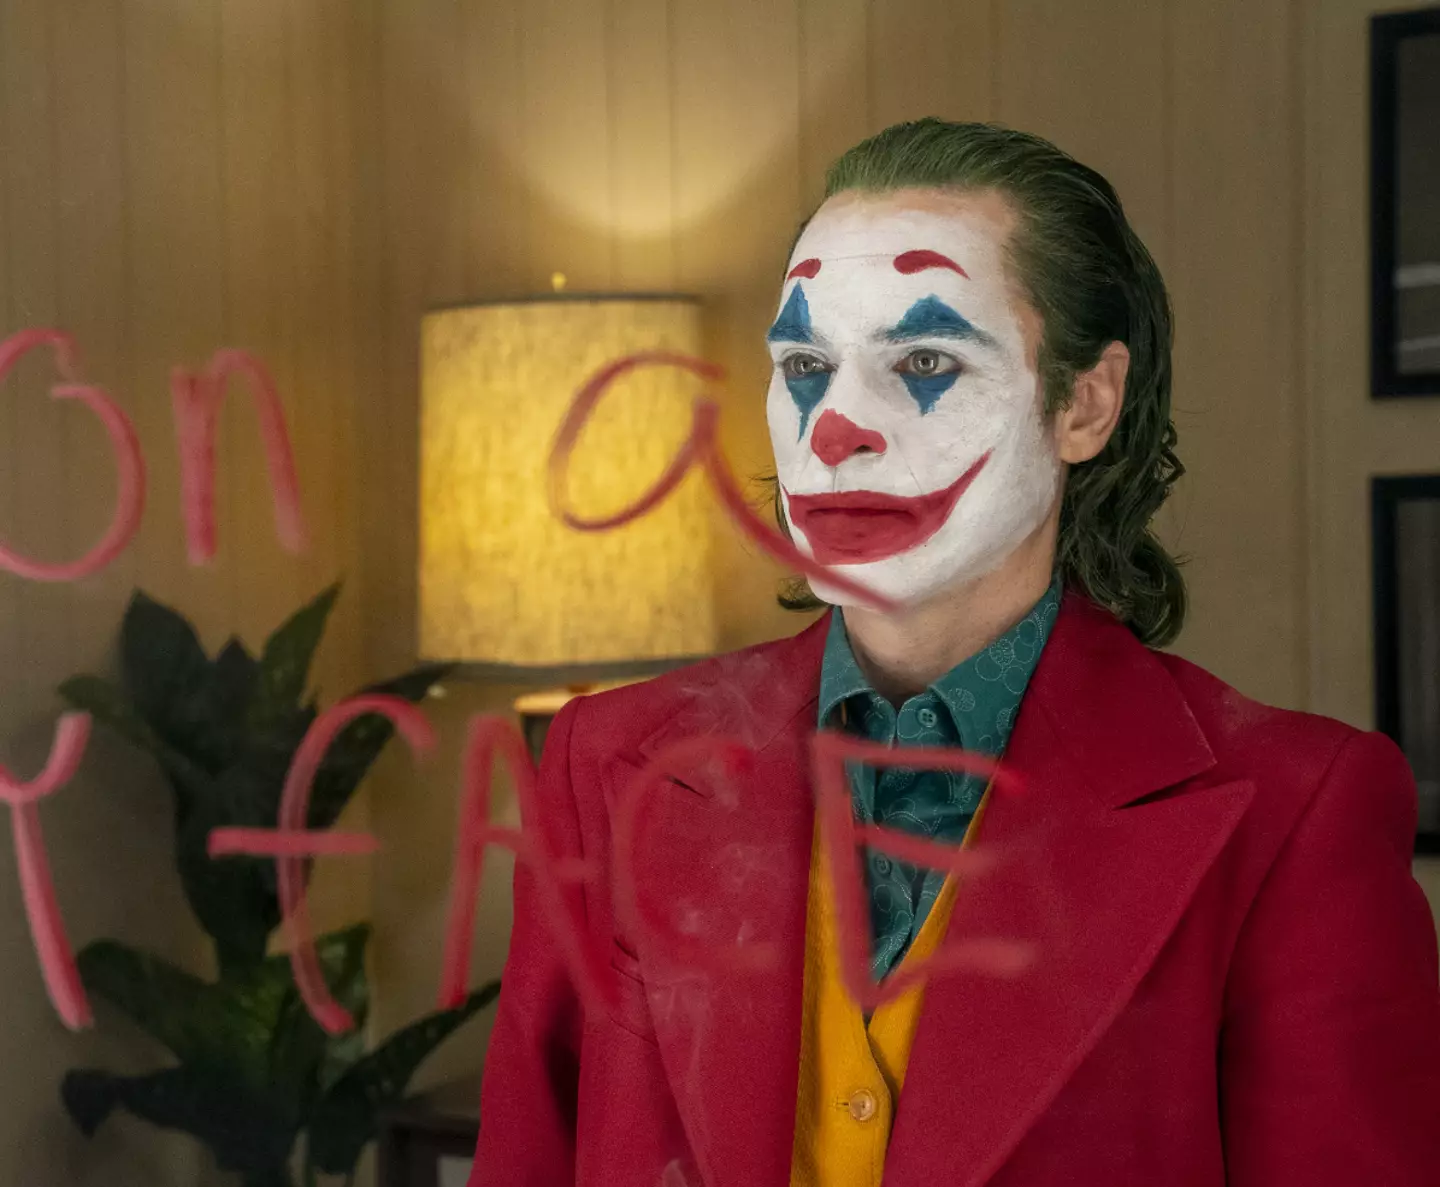 Phoenix stars as the Clown Prince of Crime in Joker.